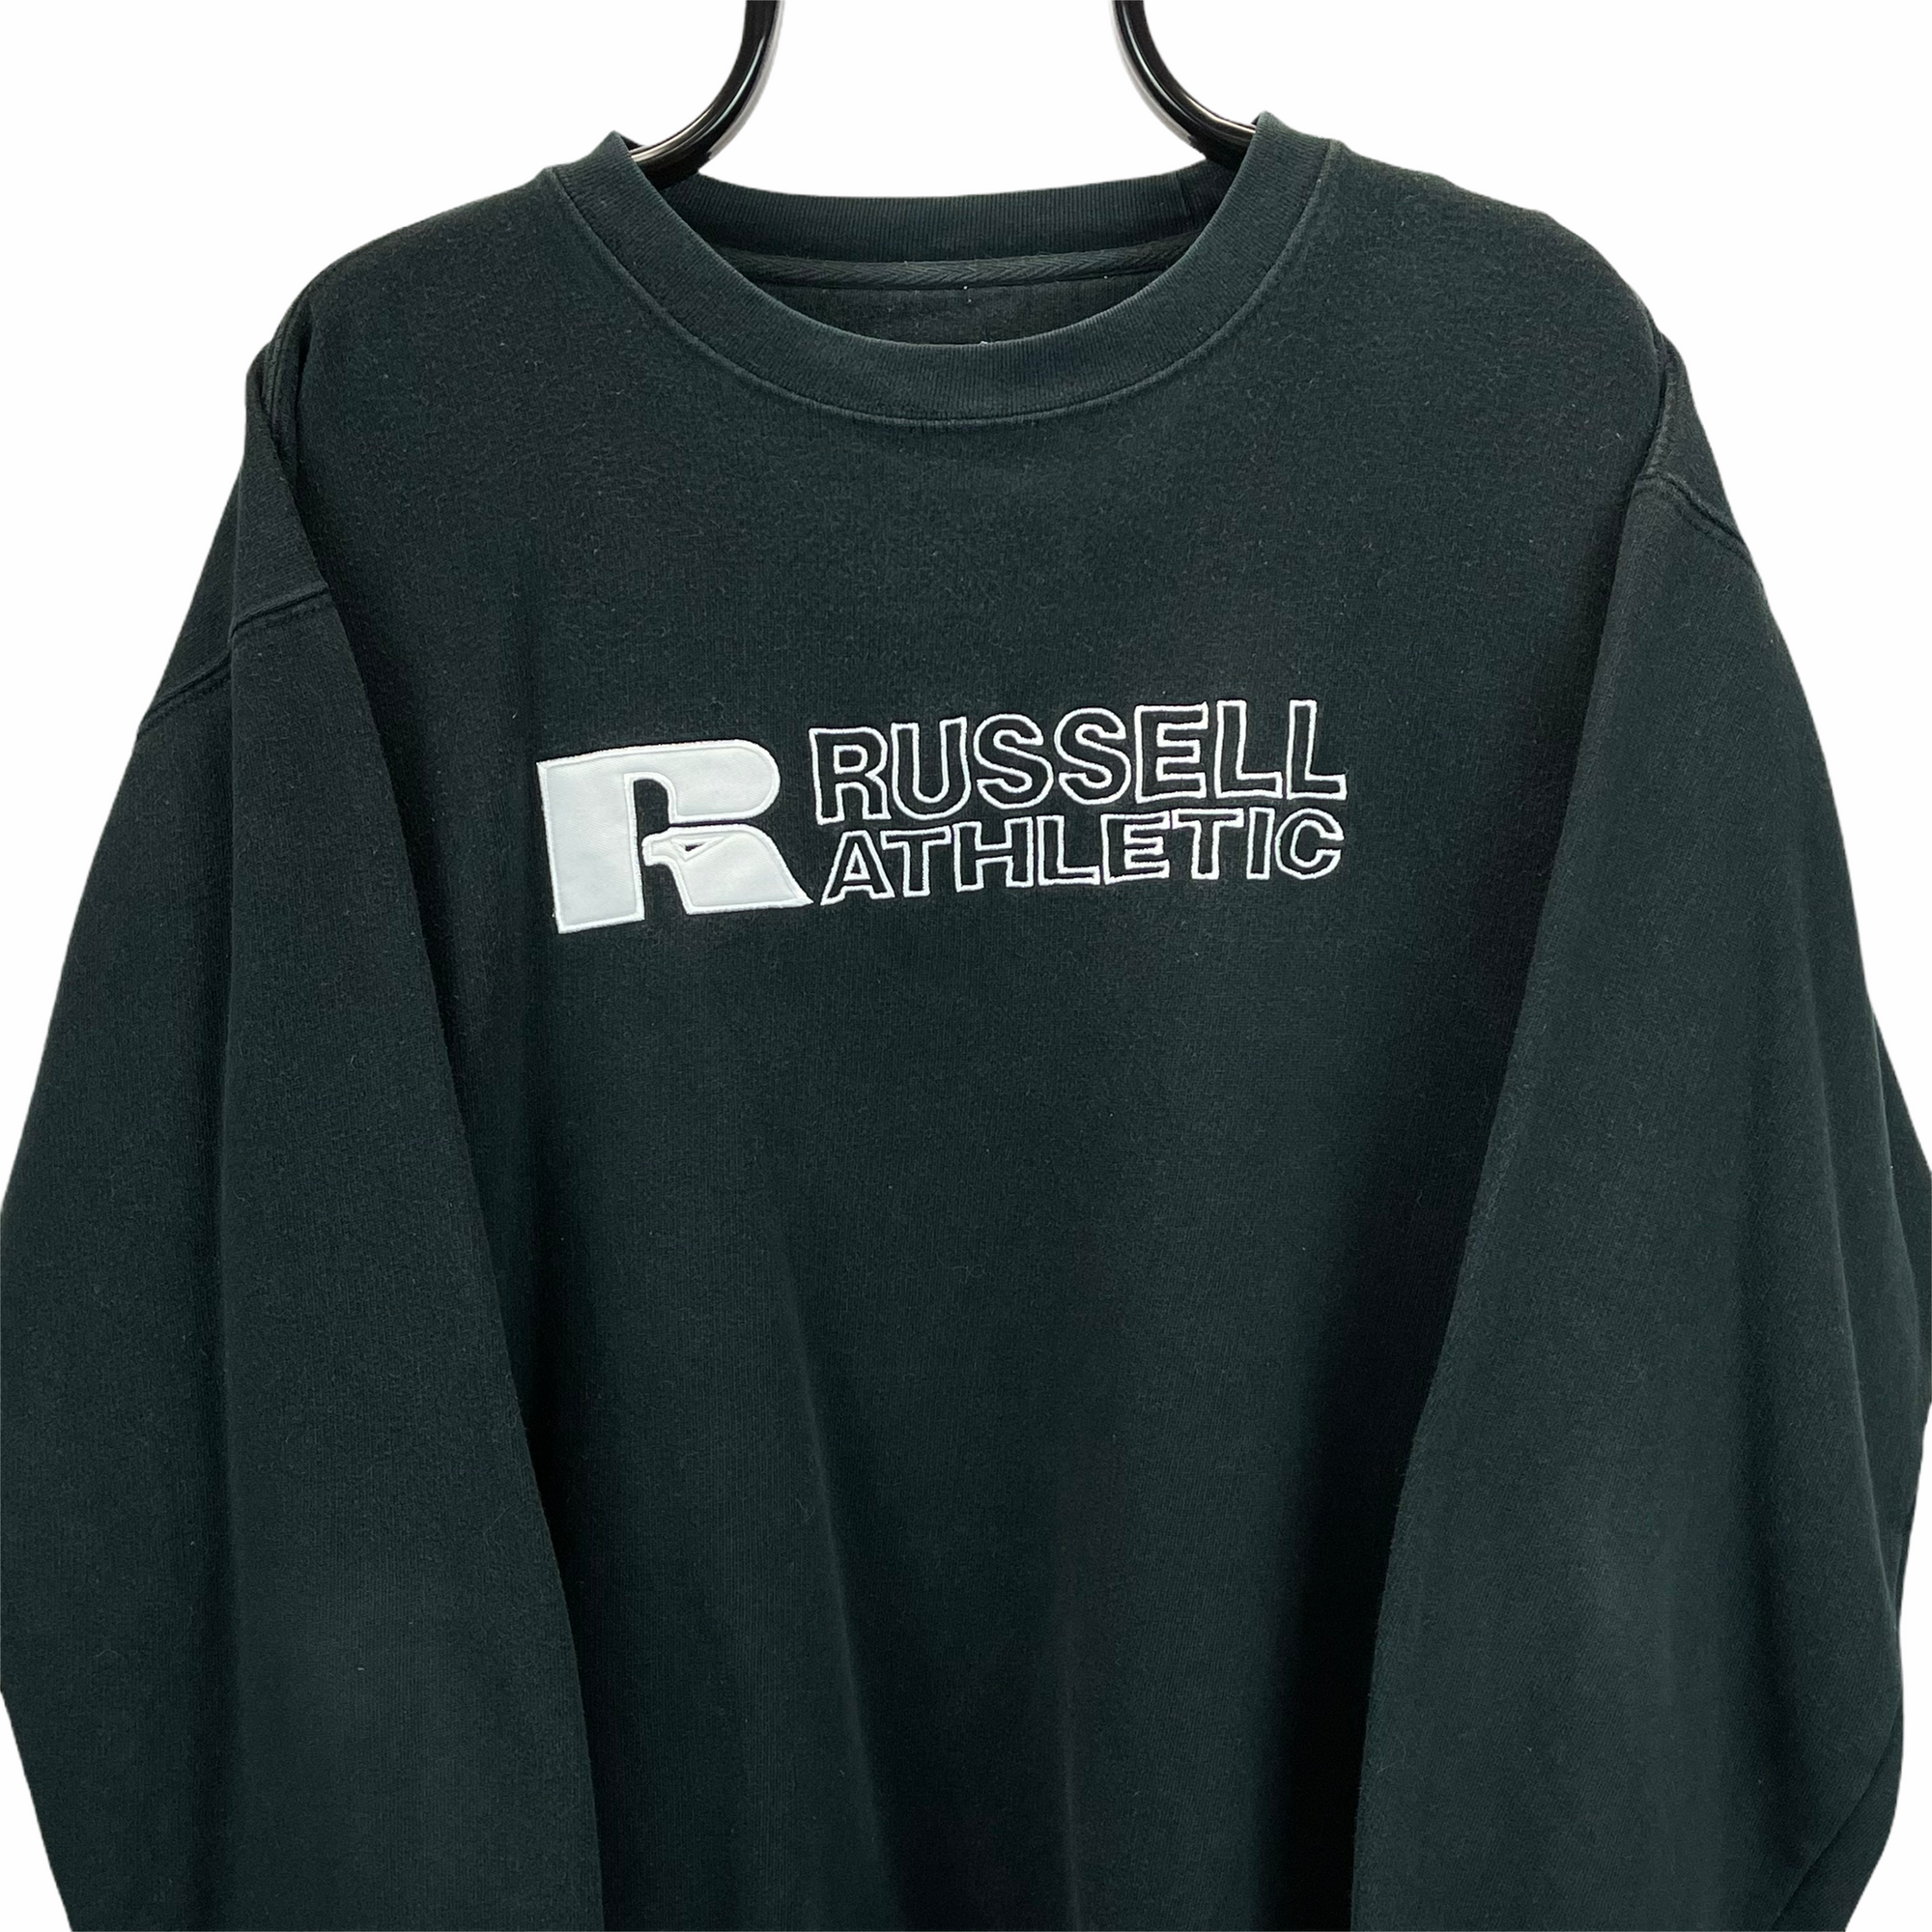 Vintage Russell Athletic Spellout Sweatshirt in Black & White - Men's XL/Women's XXL